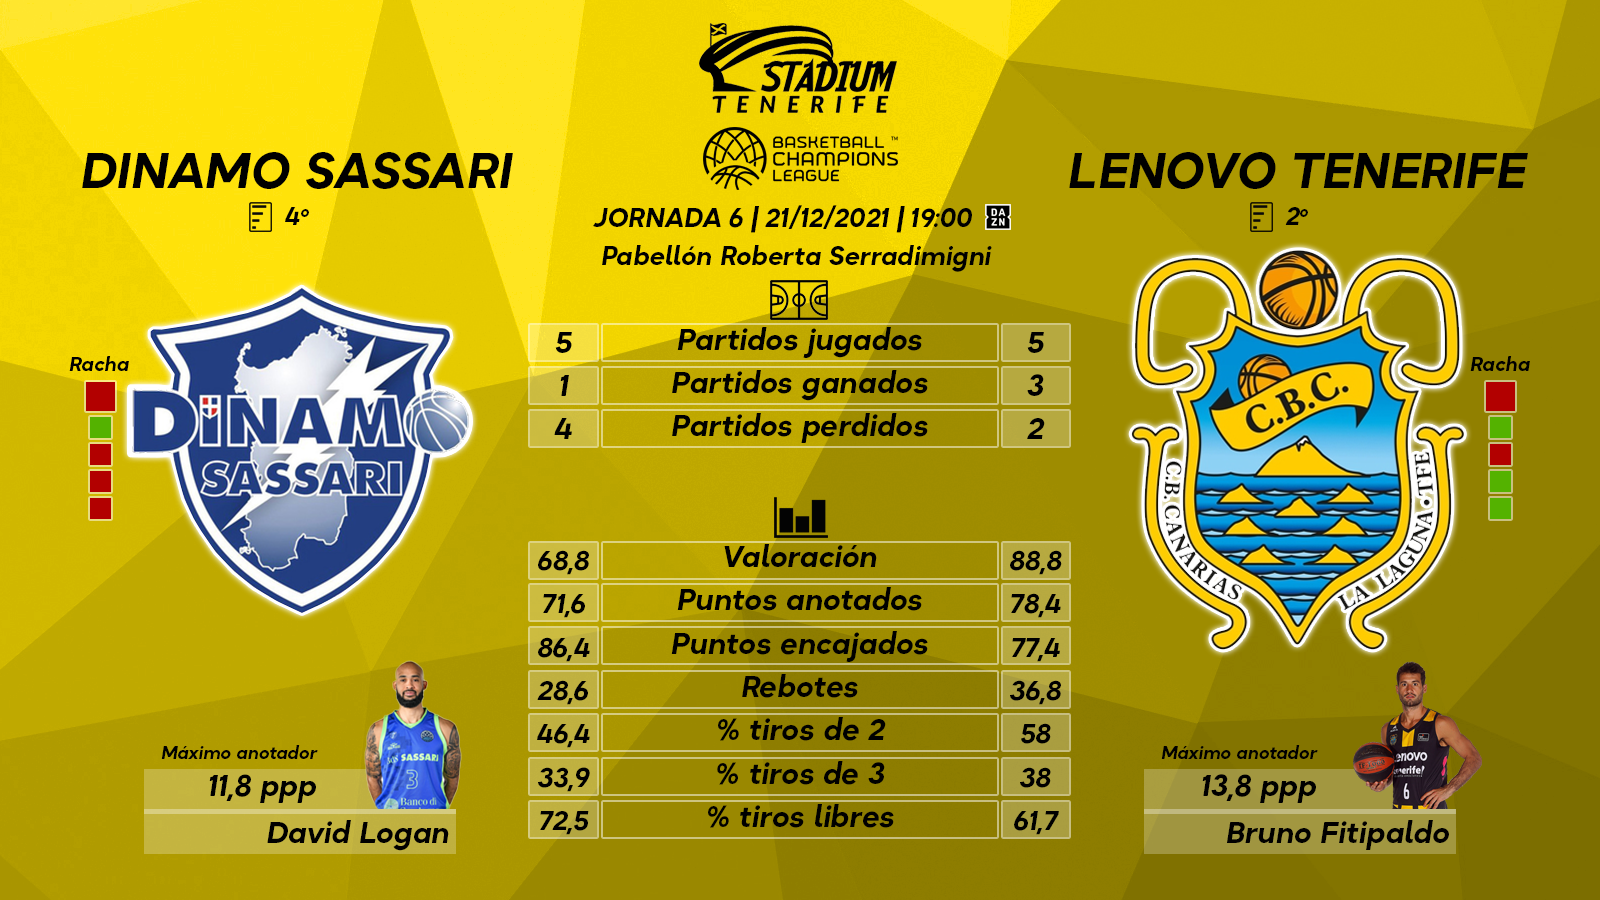 Previa del Dinamo Sassari - Lenovo Tenerife (6ª J. - Basketball Champions League)